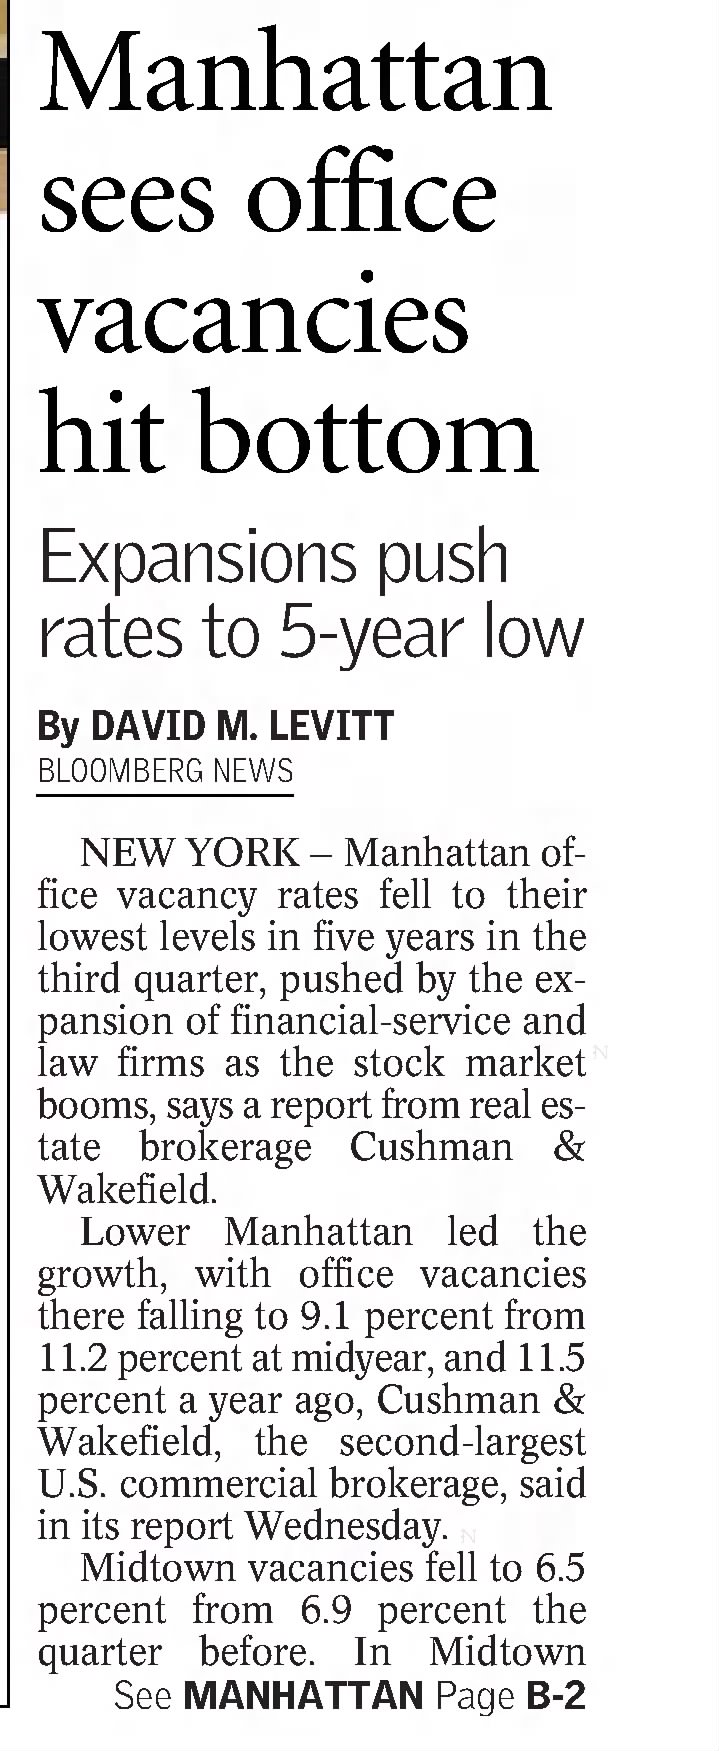 Manhattan sees office vacancies hit bottom/David M. Levitt